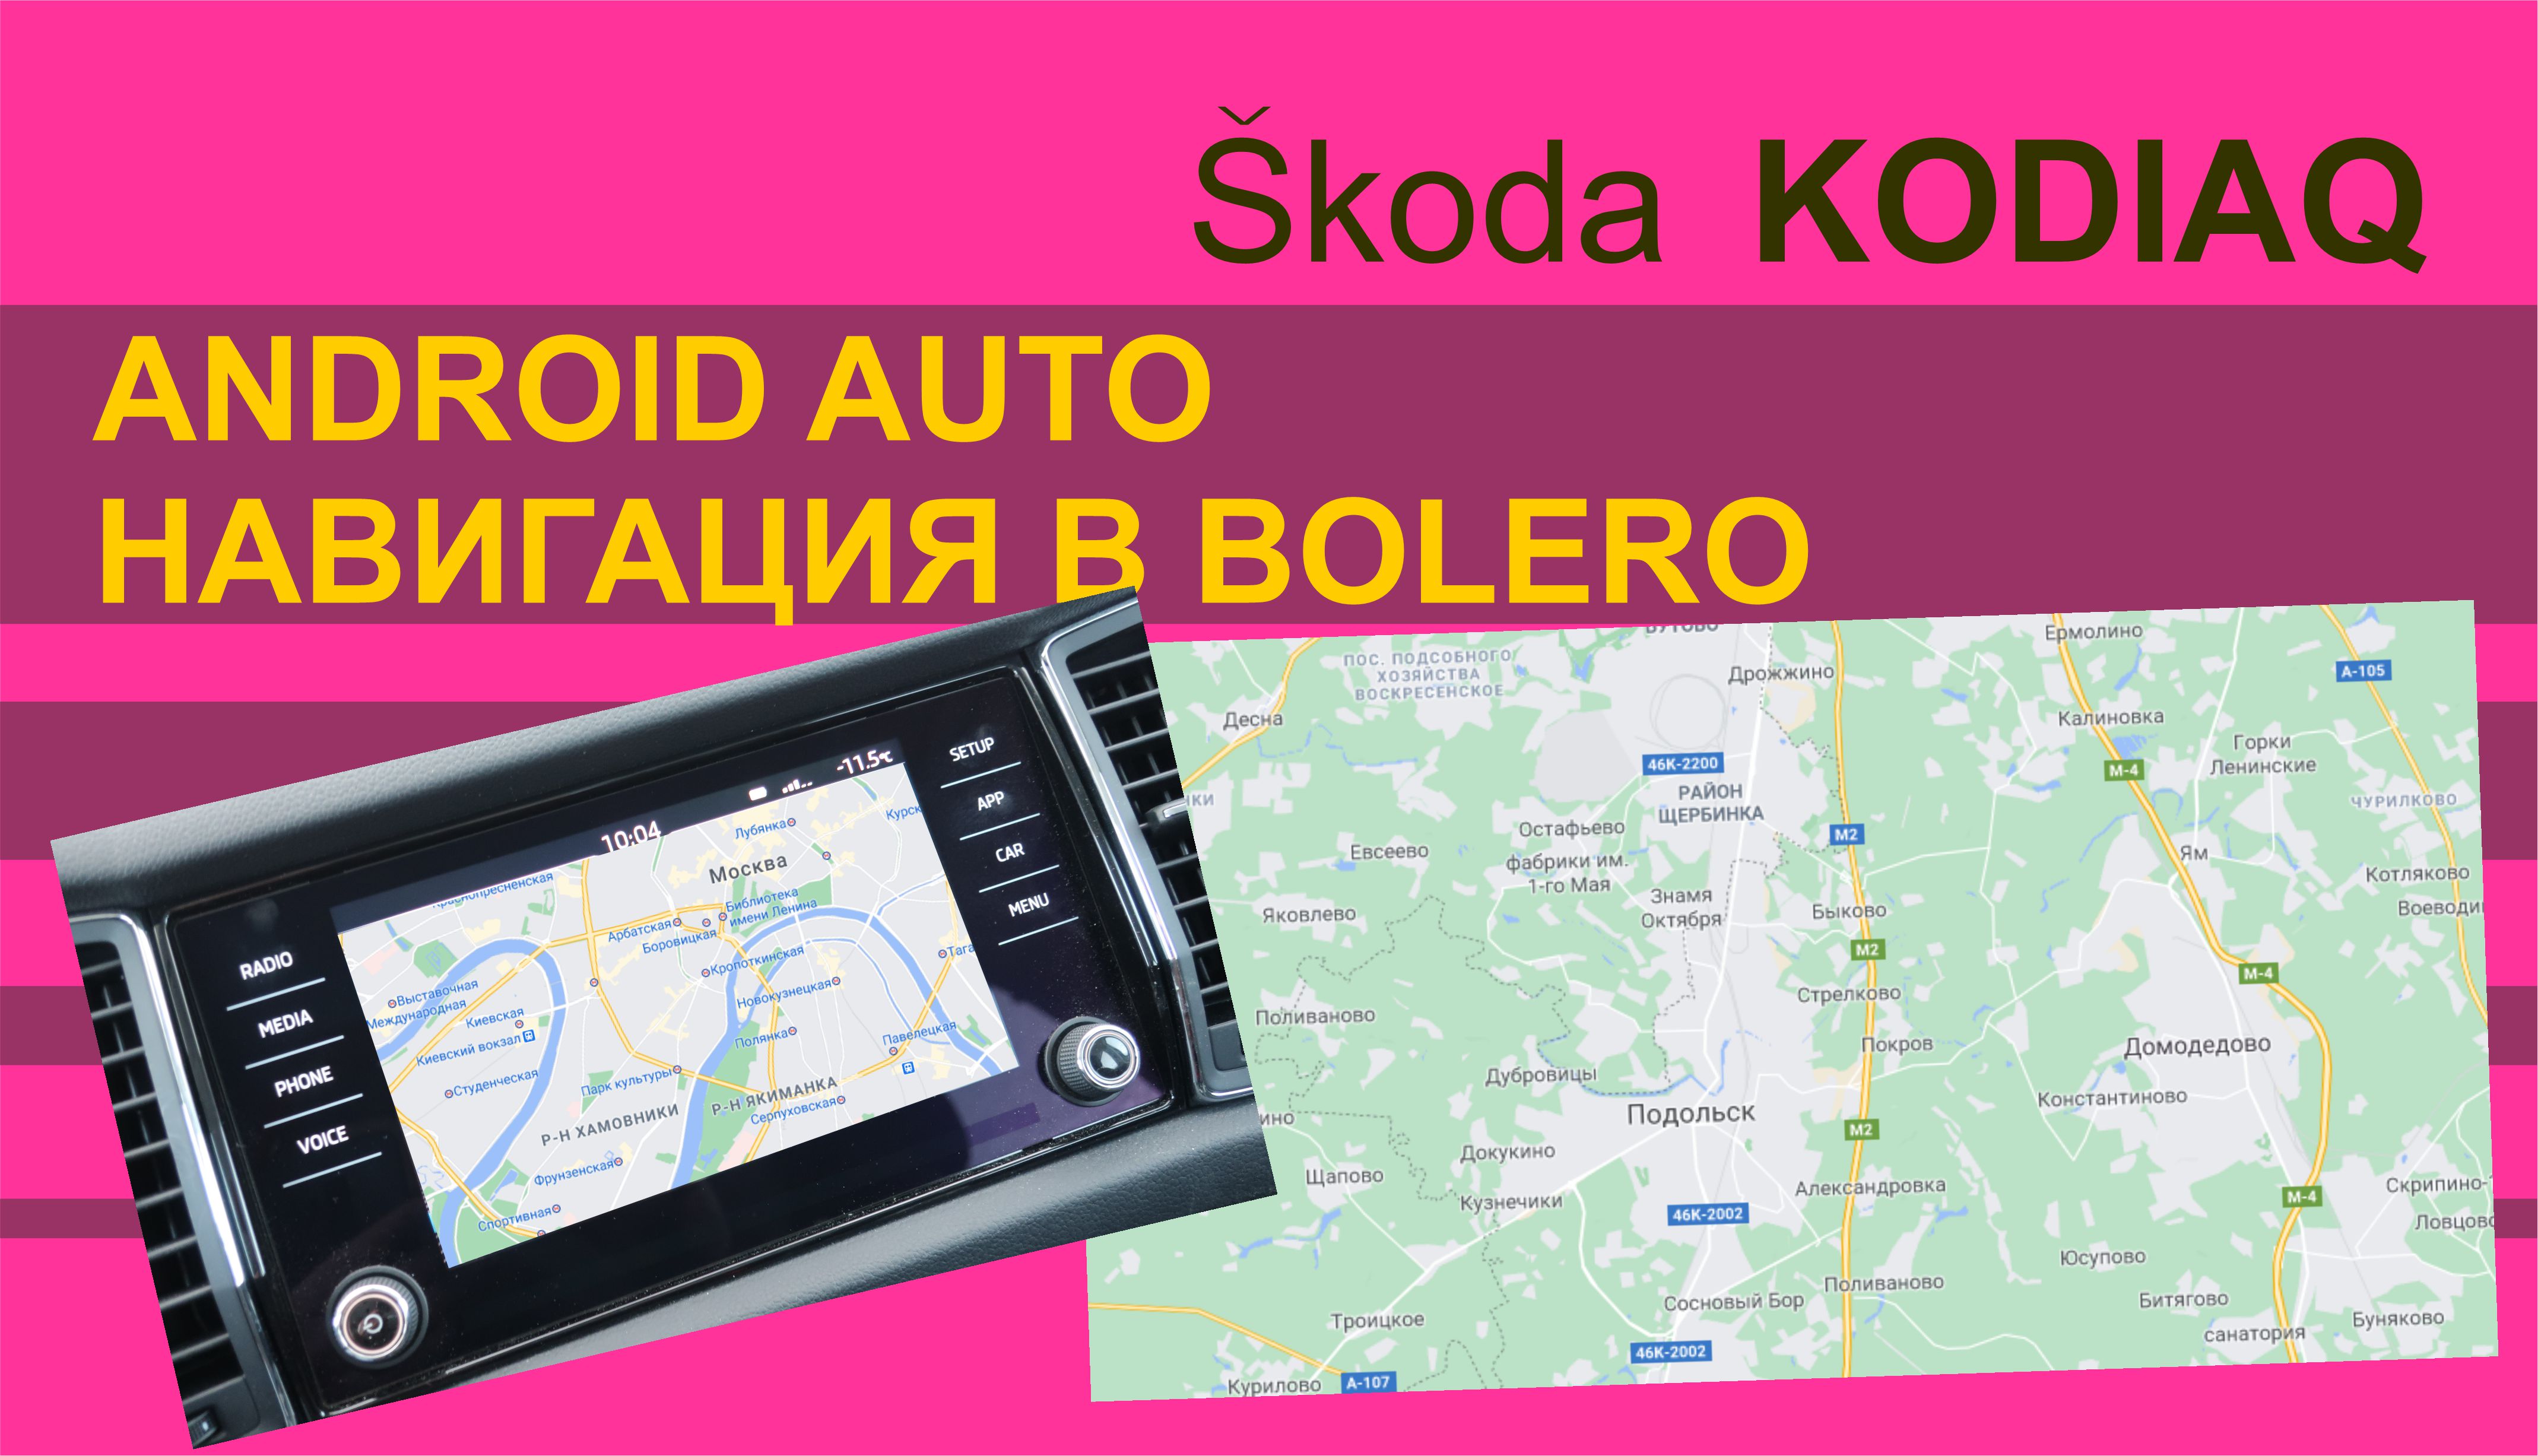 SKODA KODIAQ Android Auto и навигация в системе Bolero